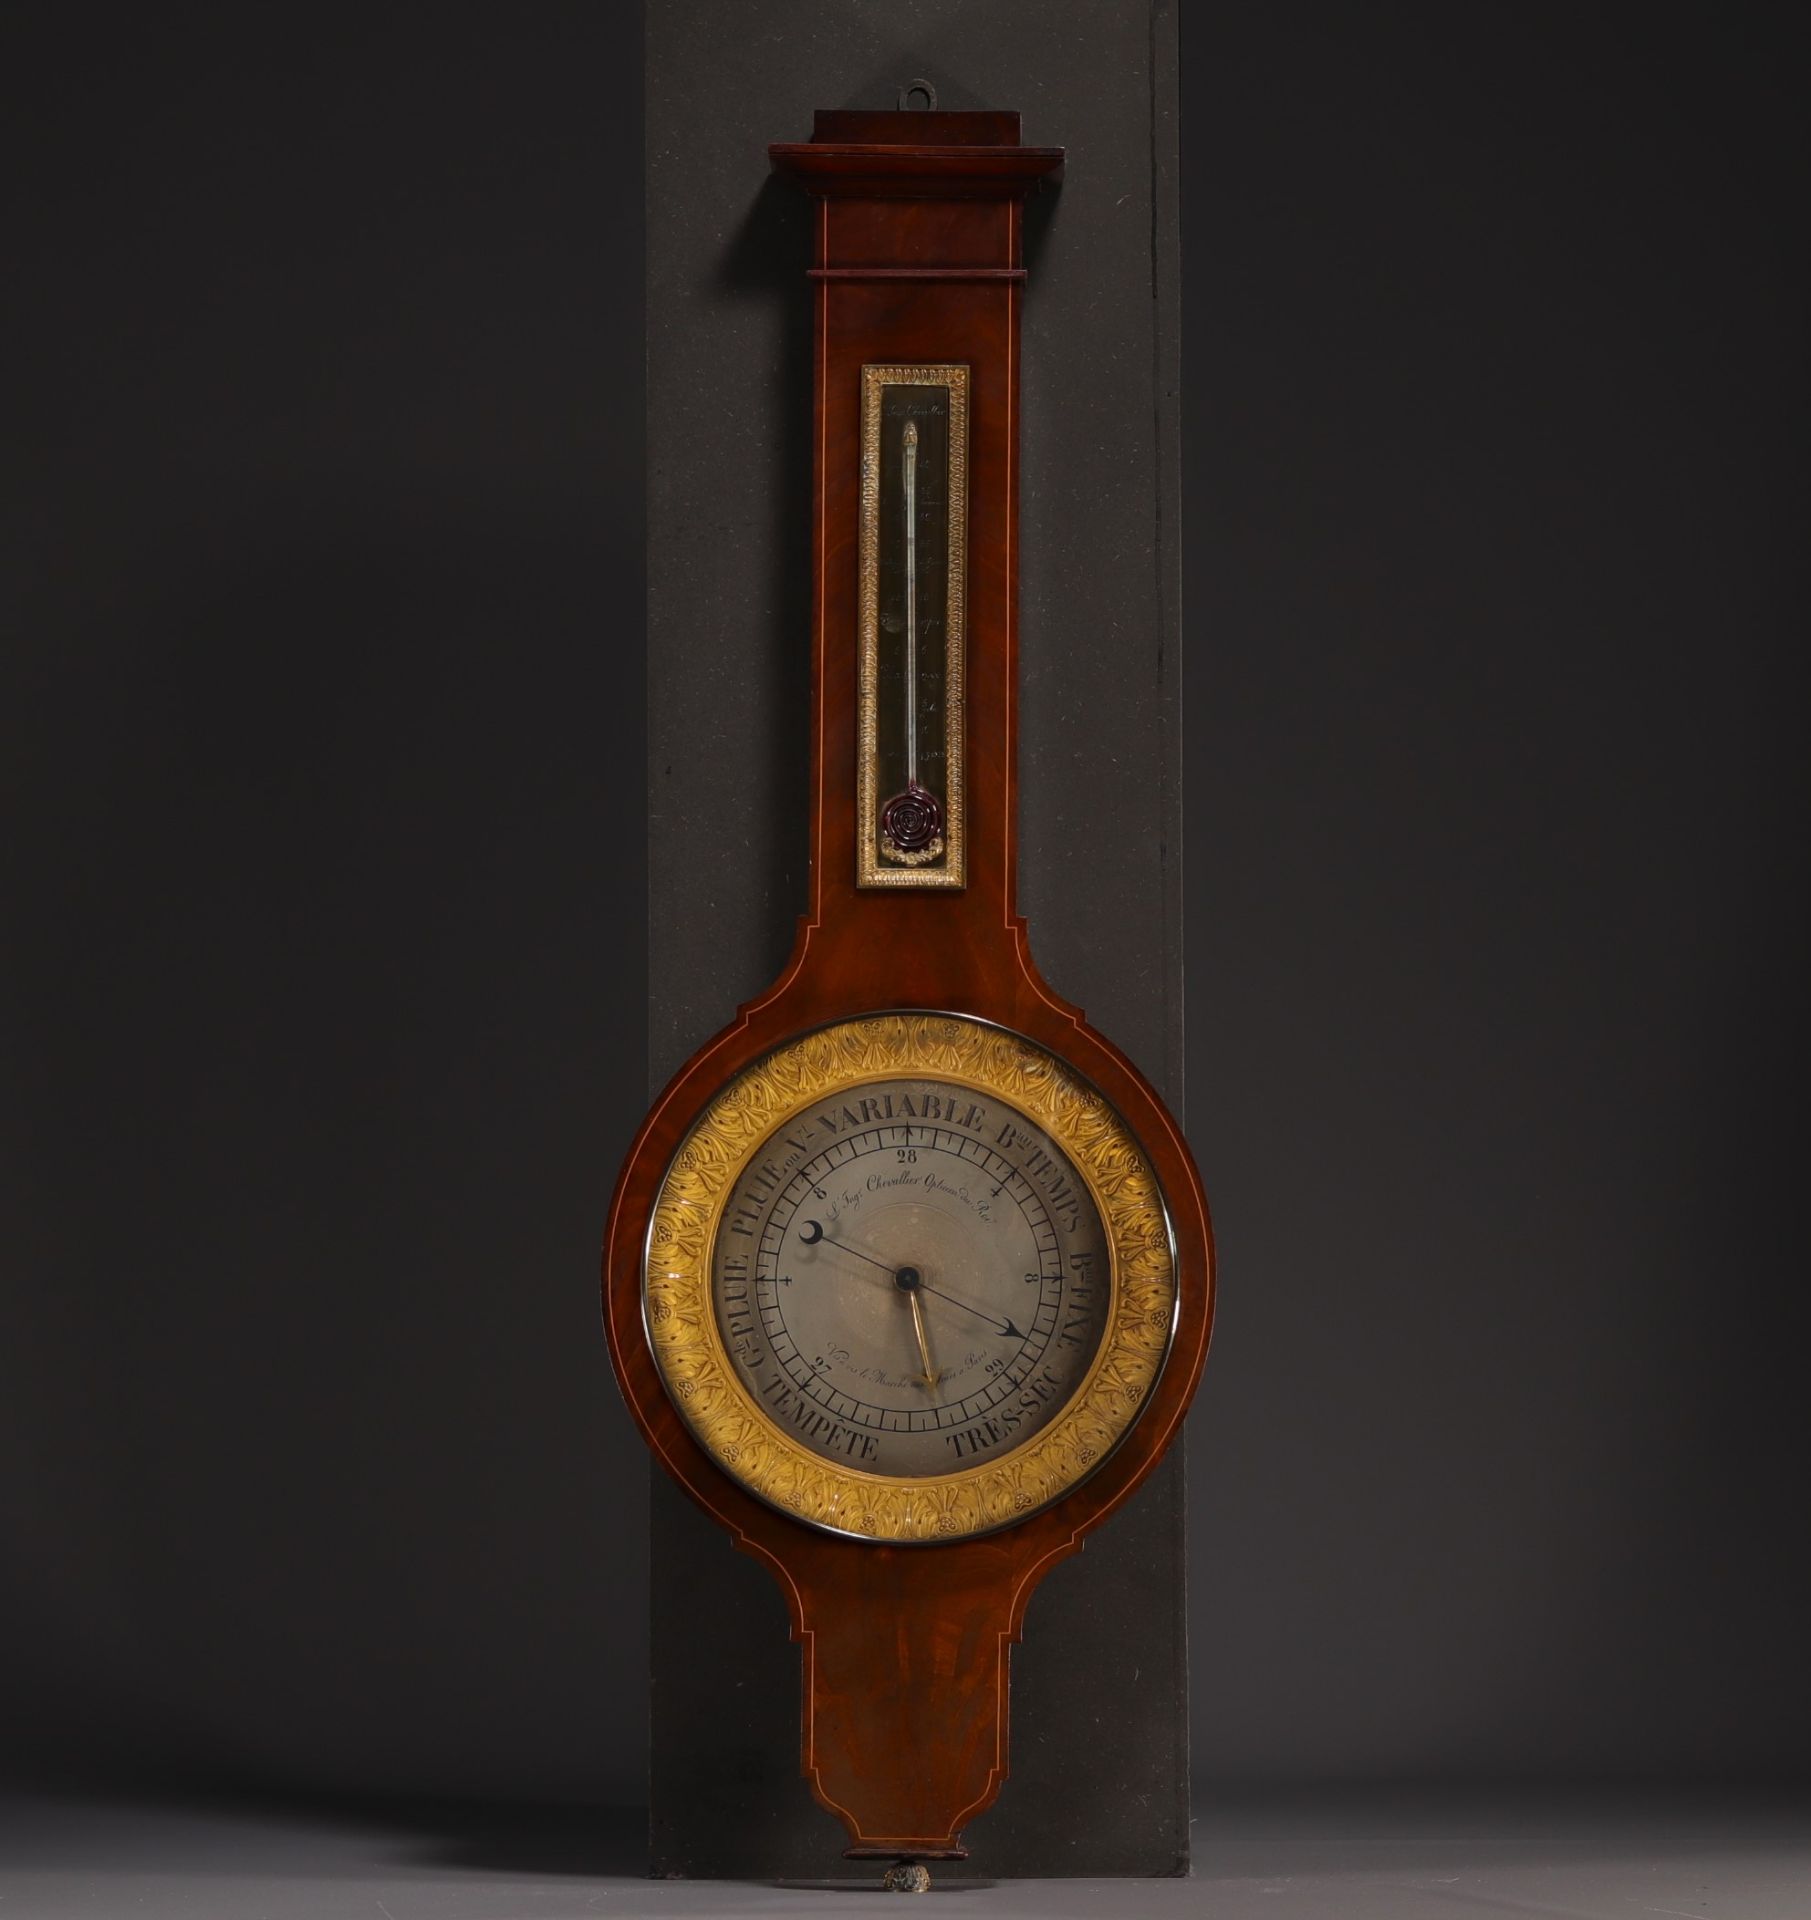 Barometer in mahogany veneer and gilt bronze "Chevallier opticien du Roi", 19th century.